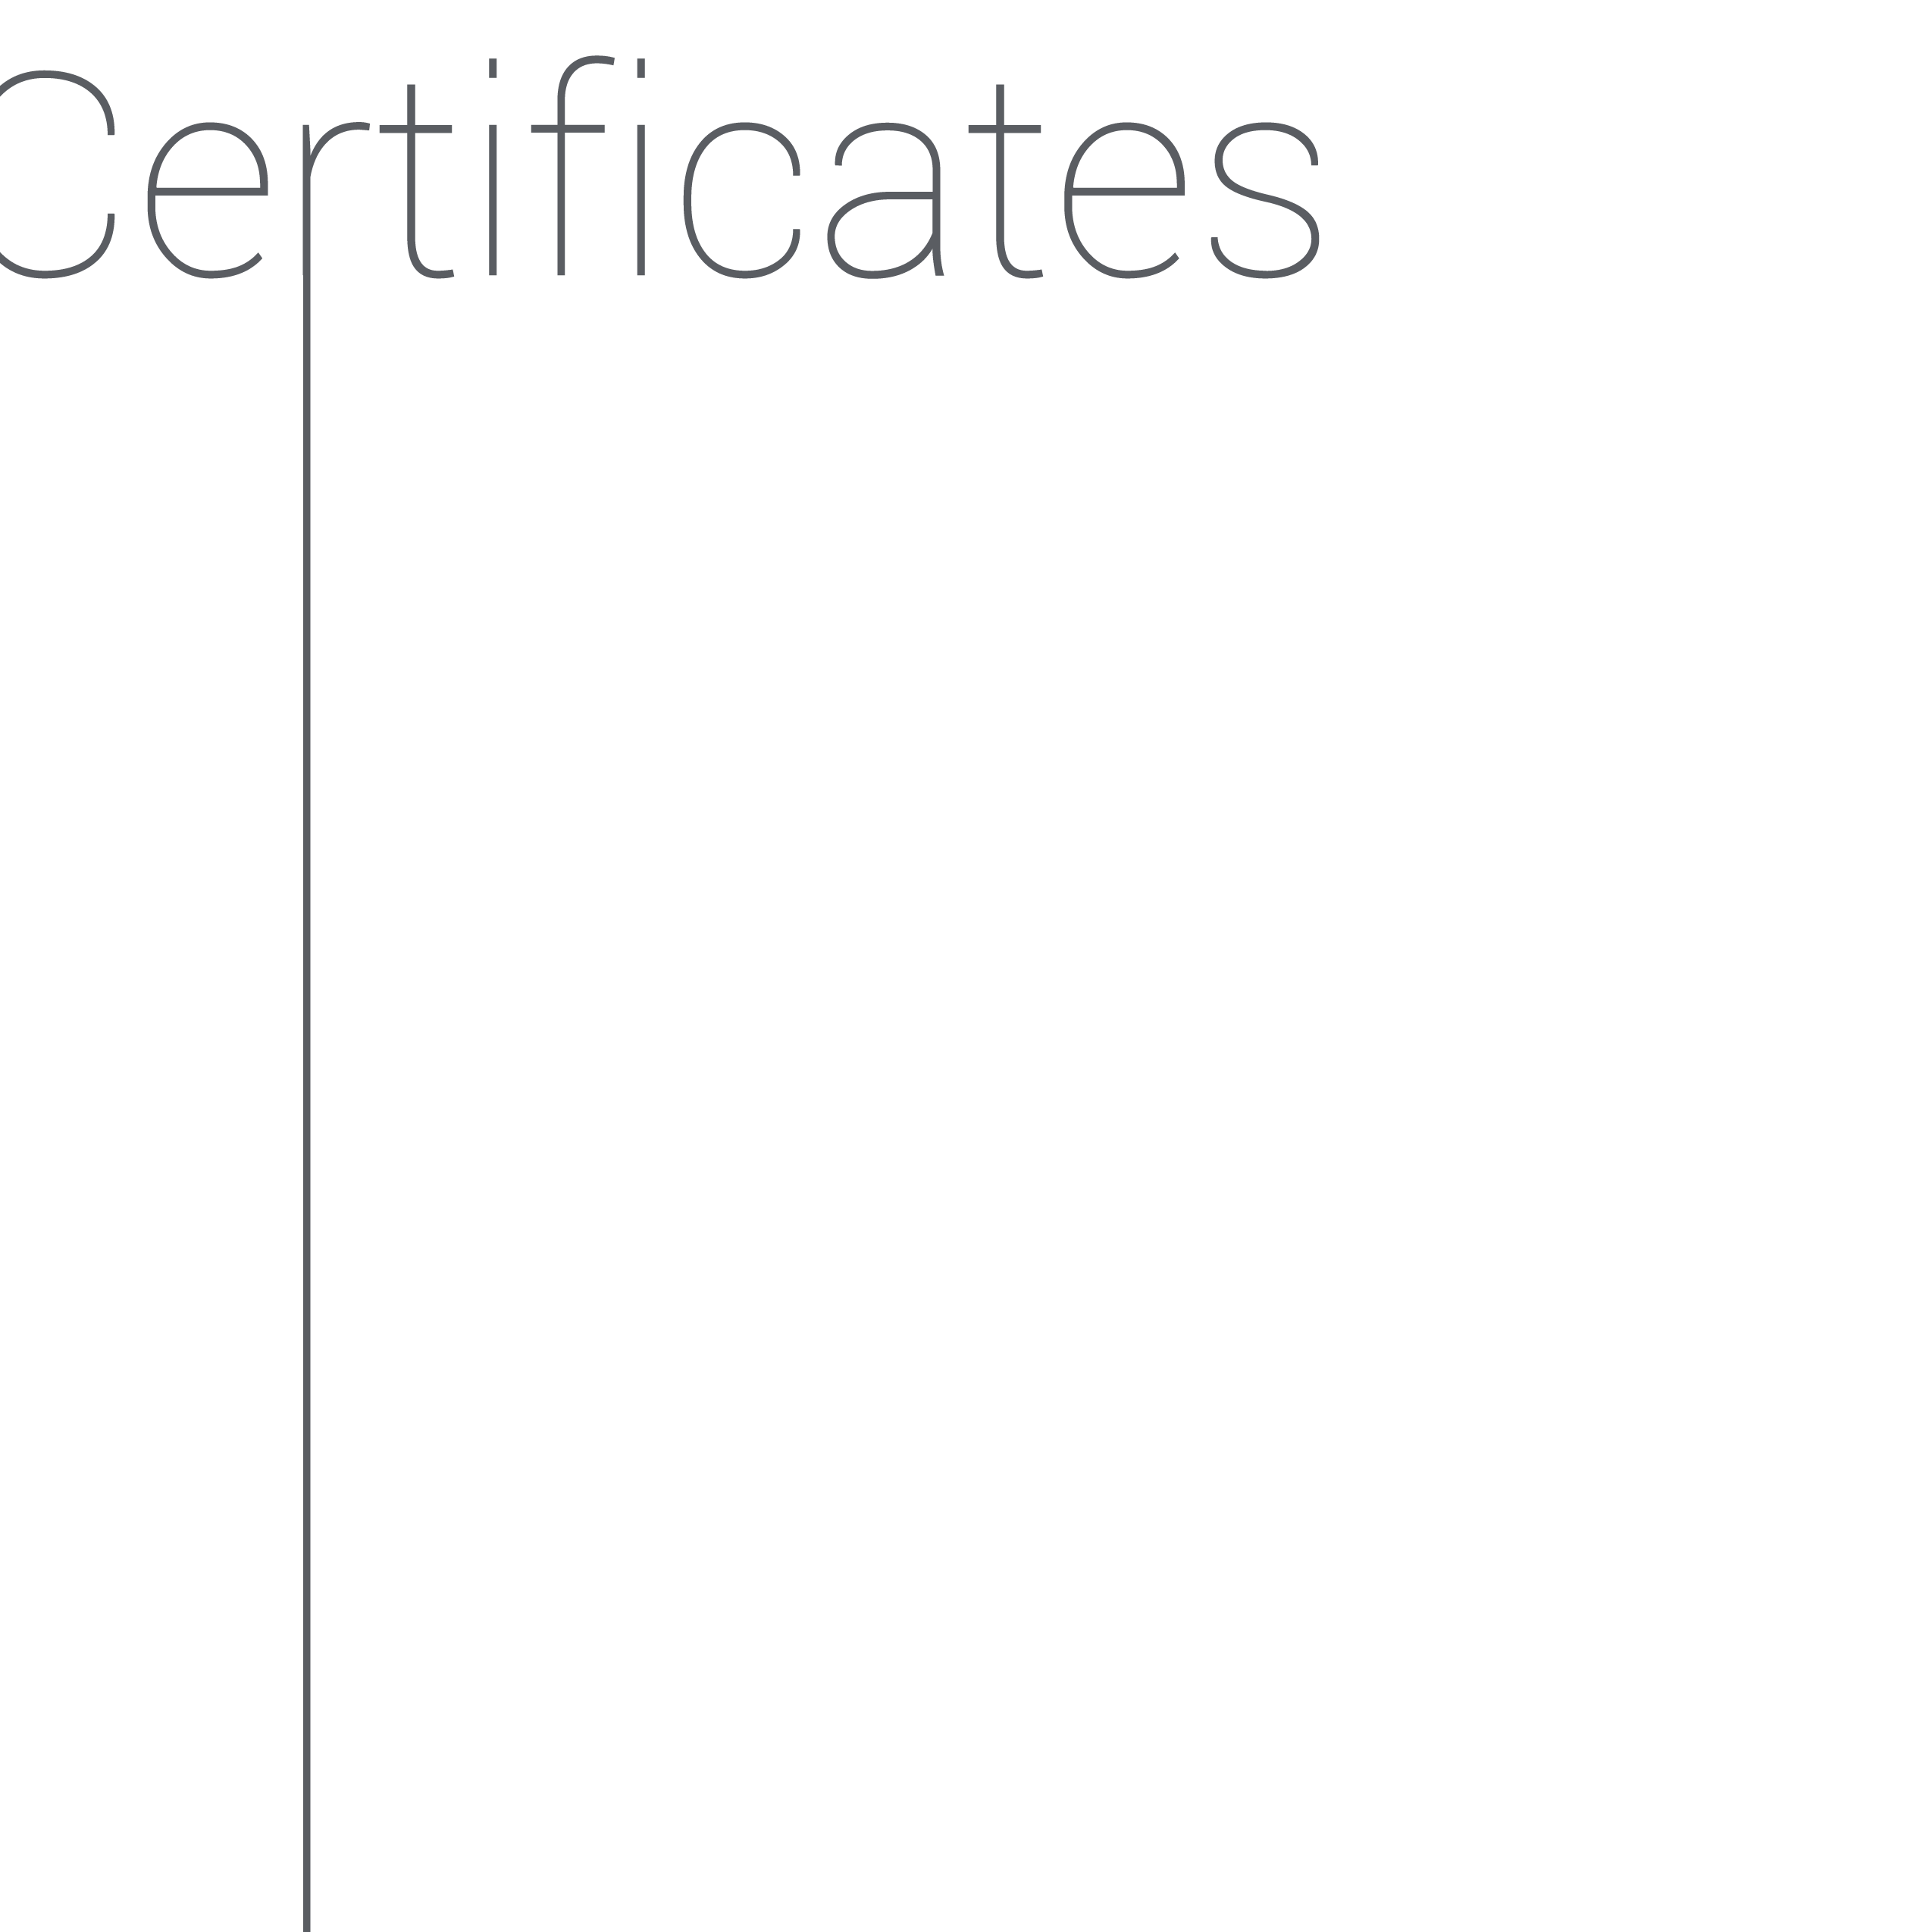 Certificates title